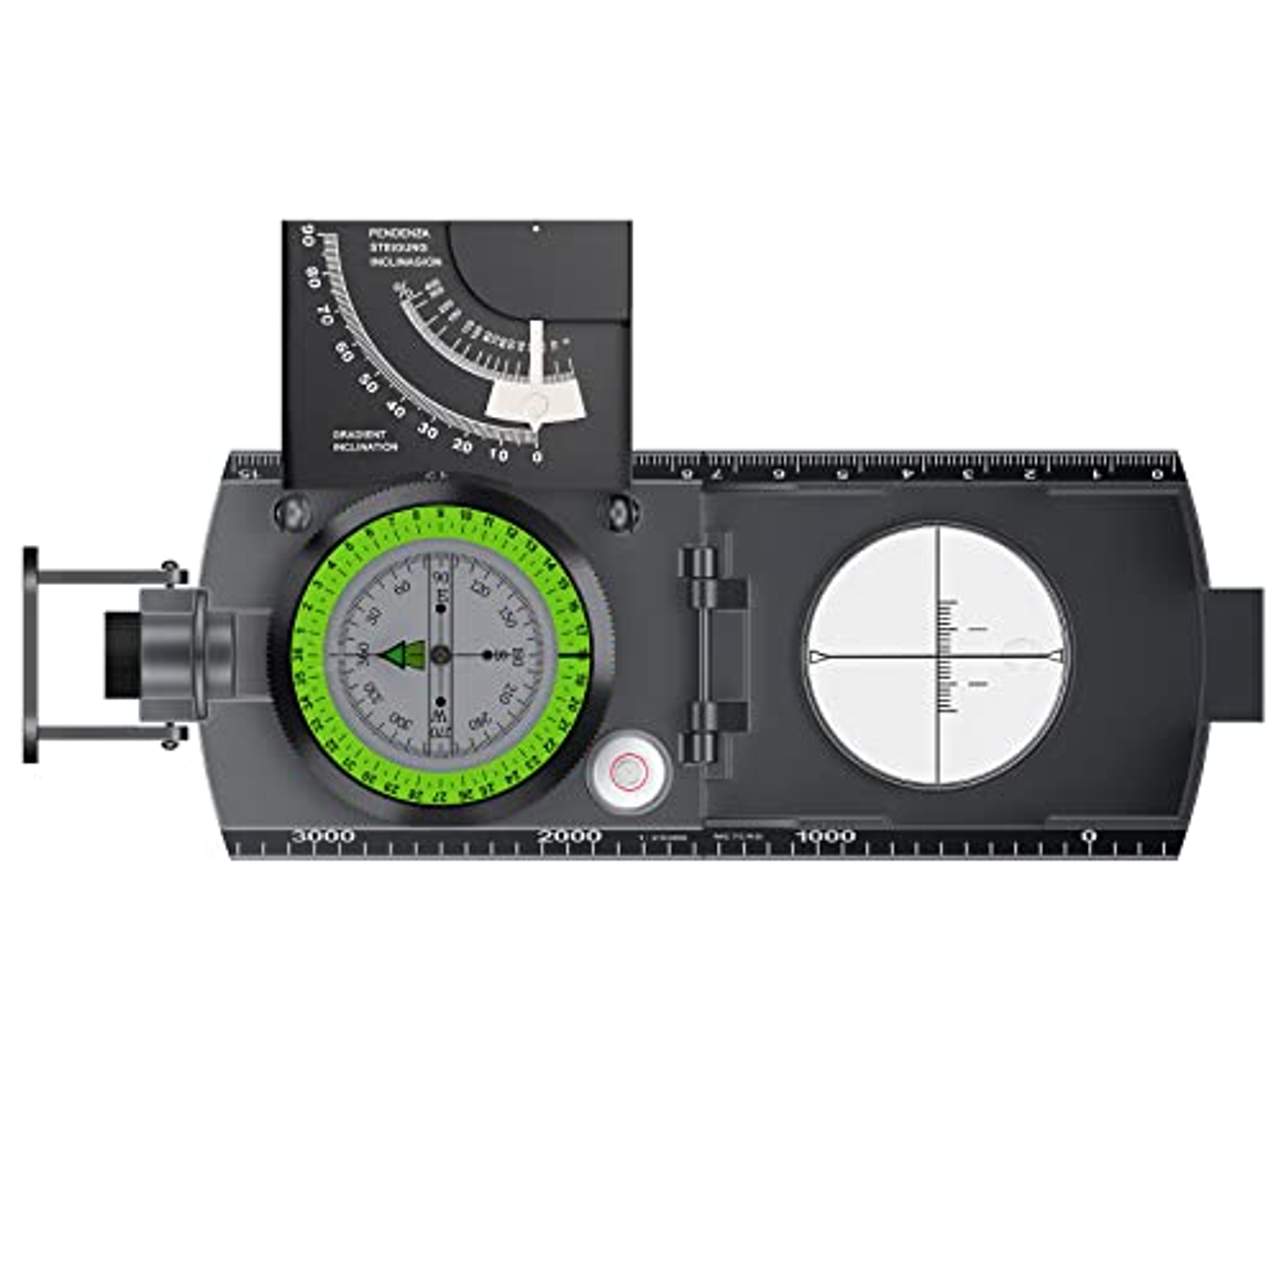 Anbte Kompass Militär Marschkompass